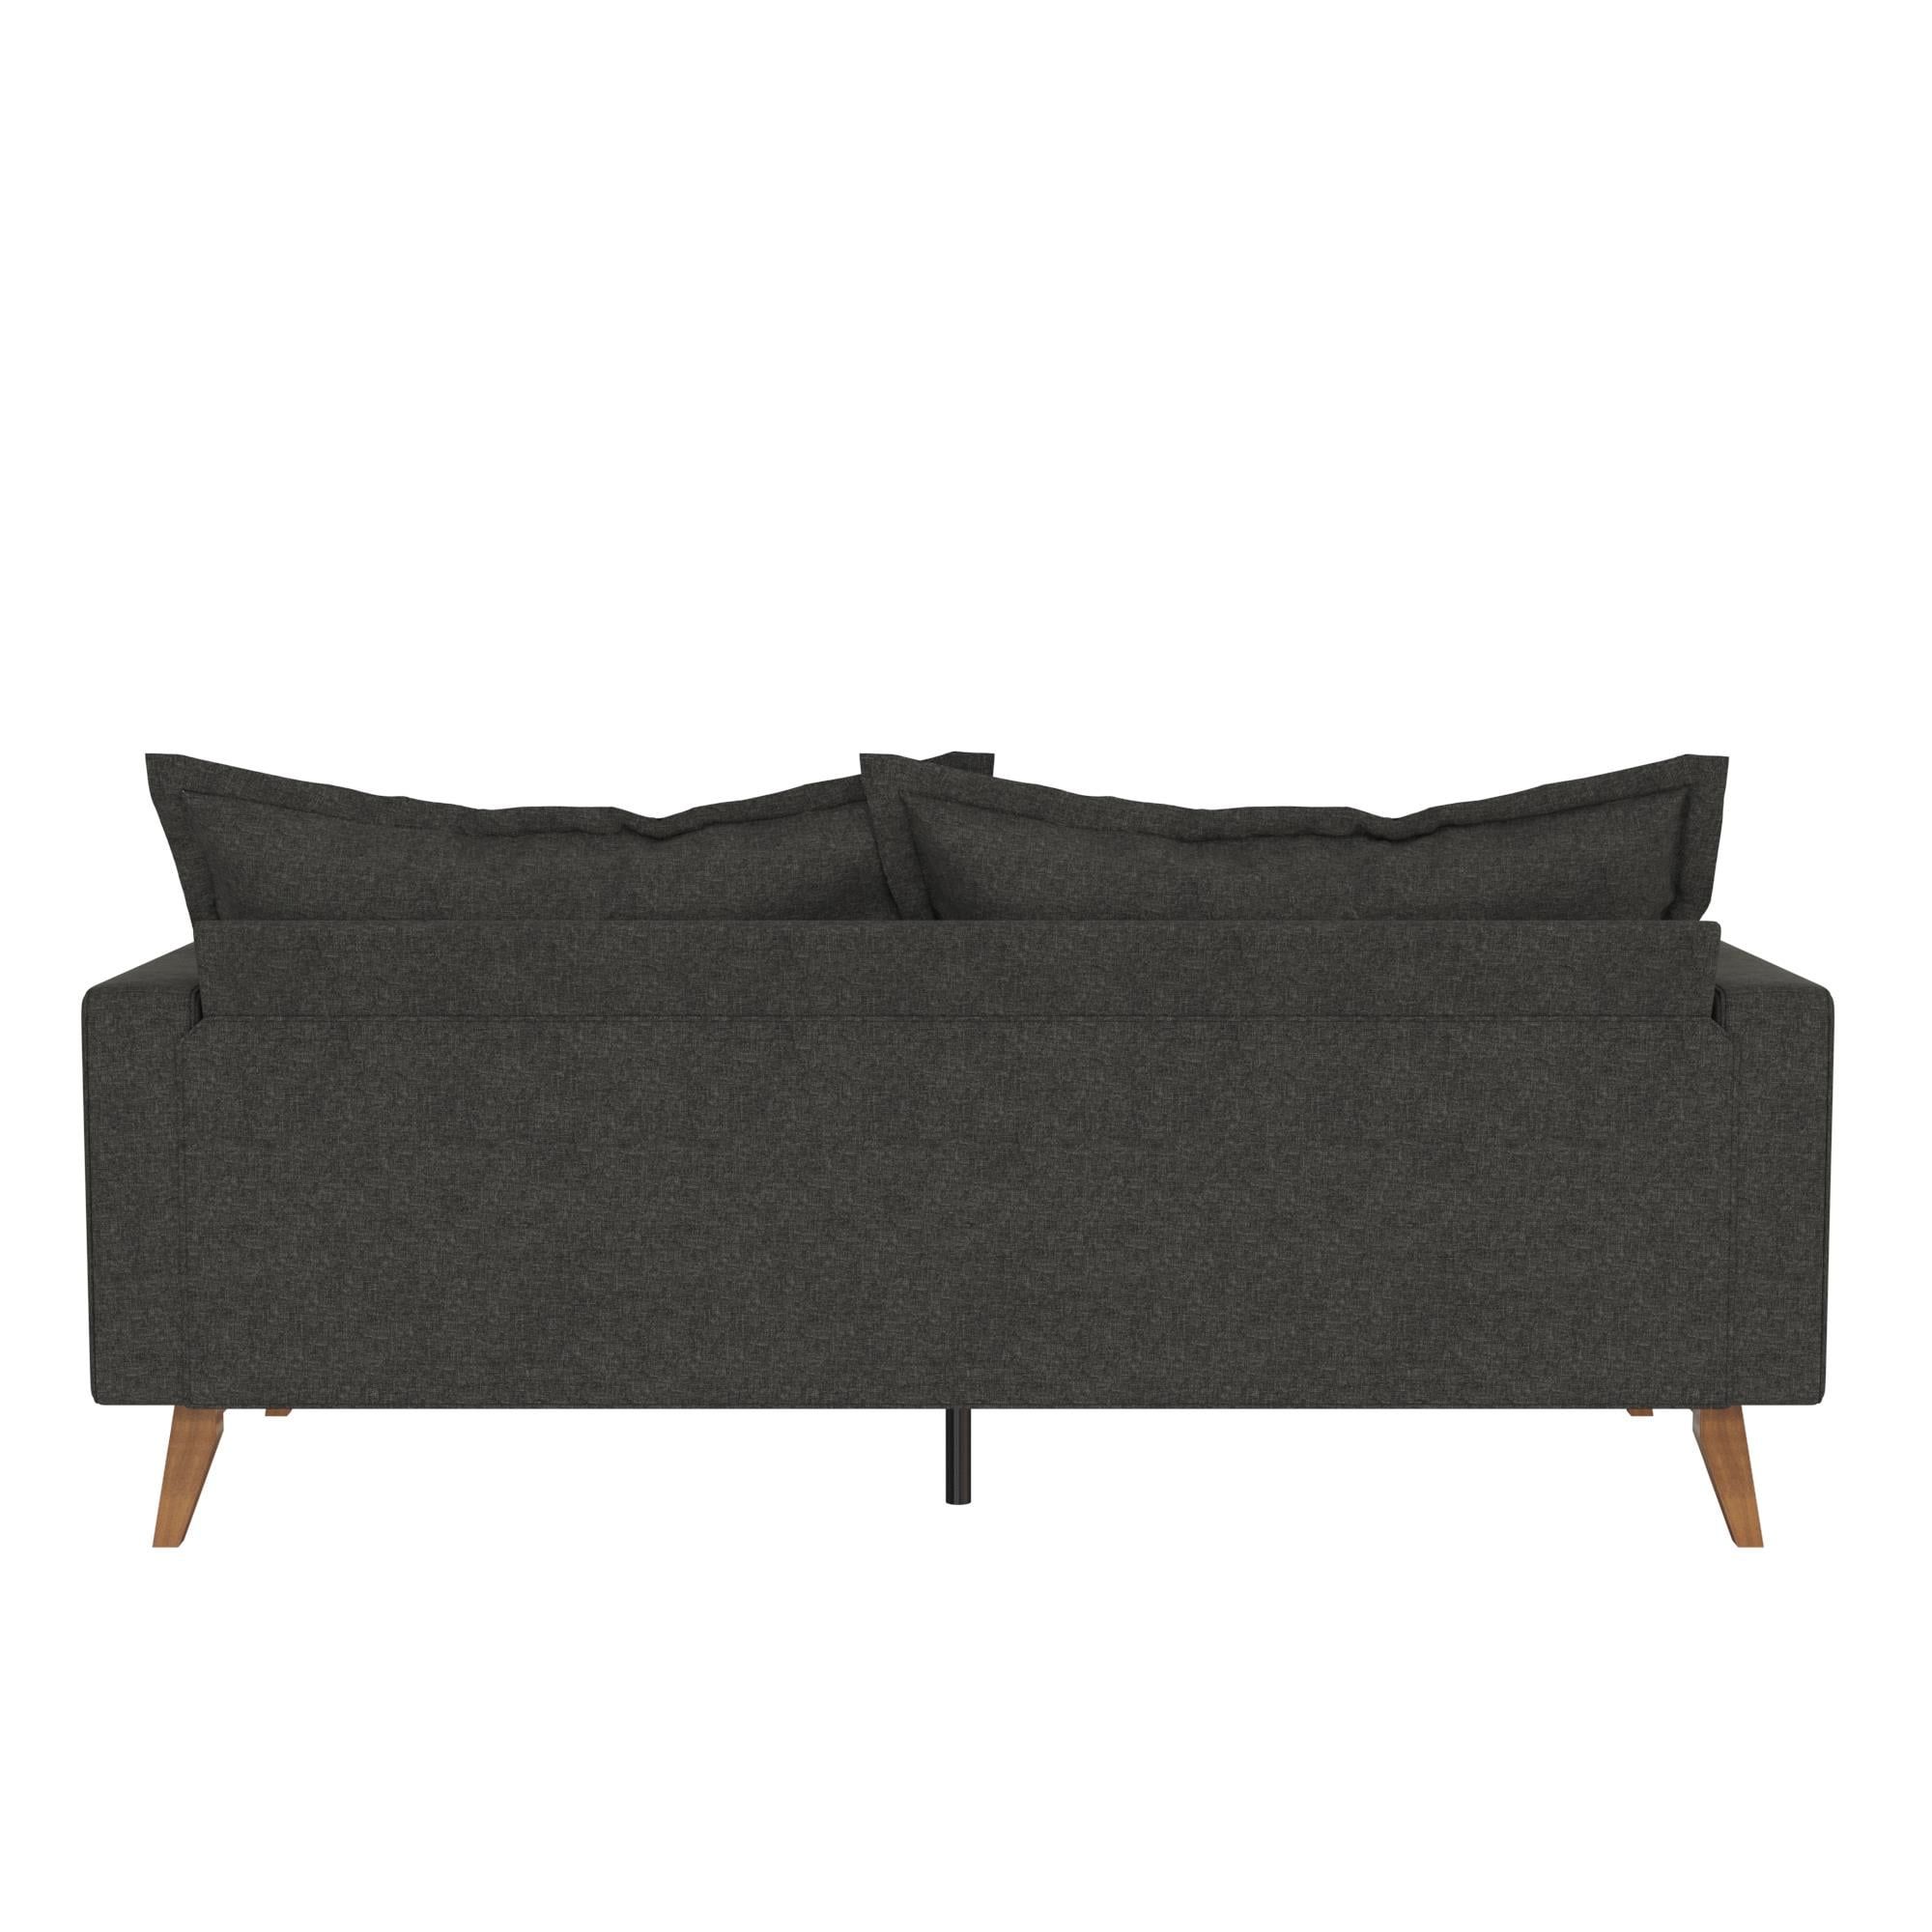 Dhp Miriam Pillowback Wood Base Sofa, Gray Linen – Walmart Regarding Sofas With Pillowback Wood Bases (Gallery 11 of 20)